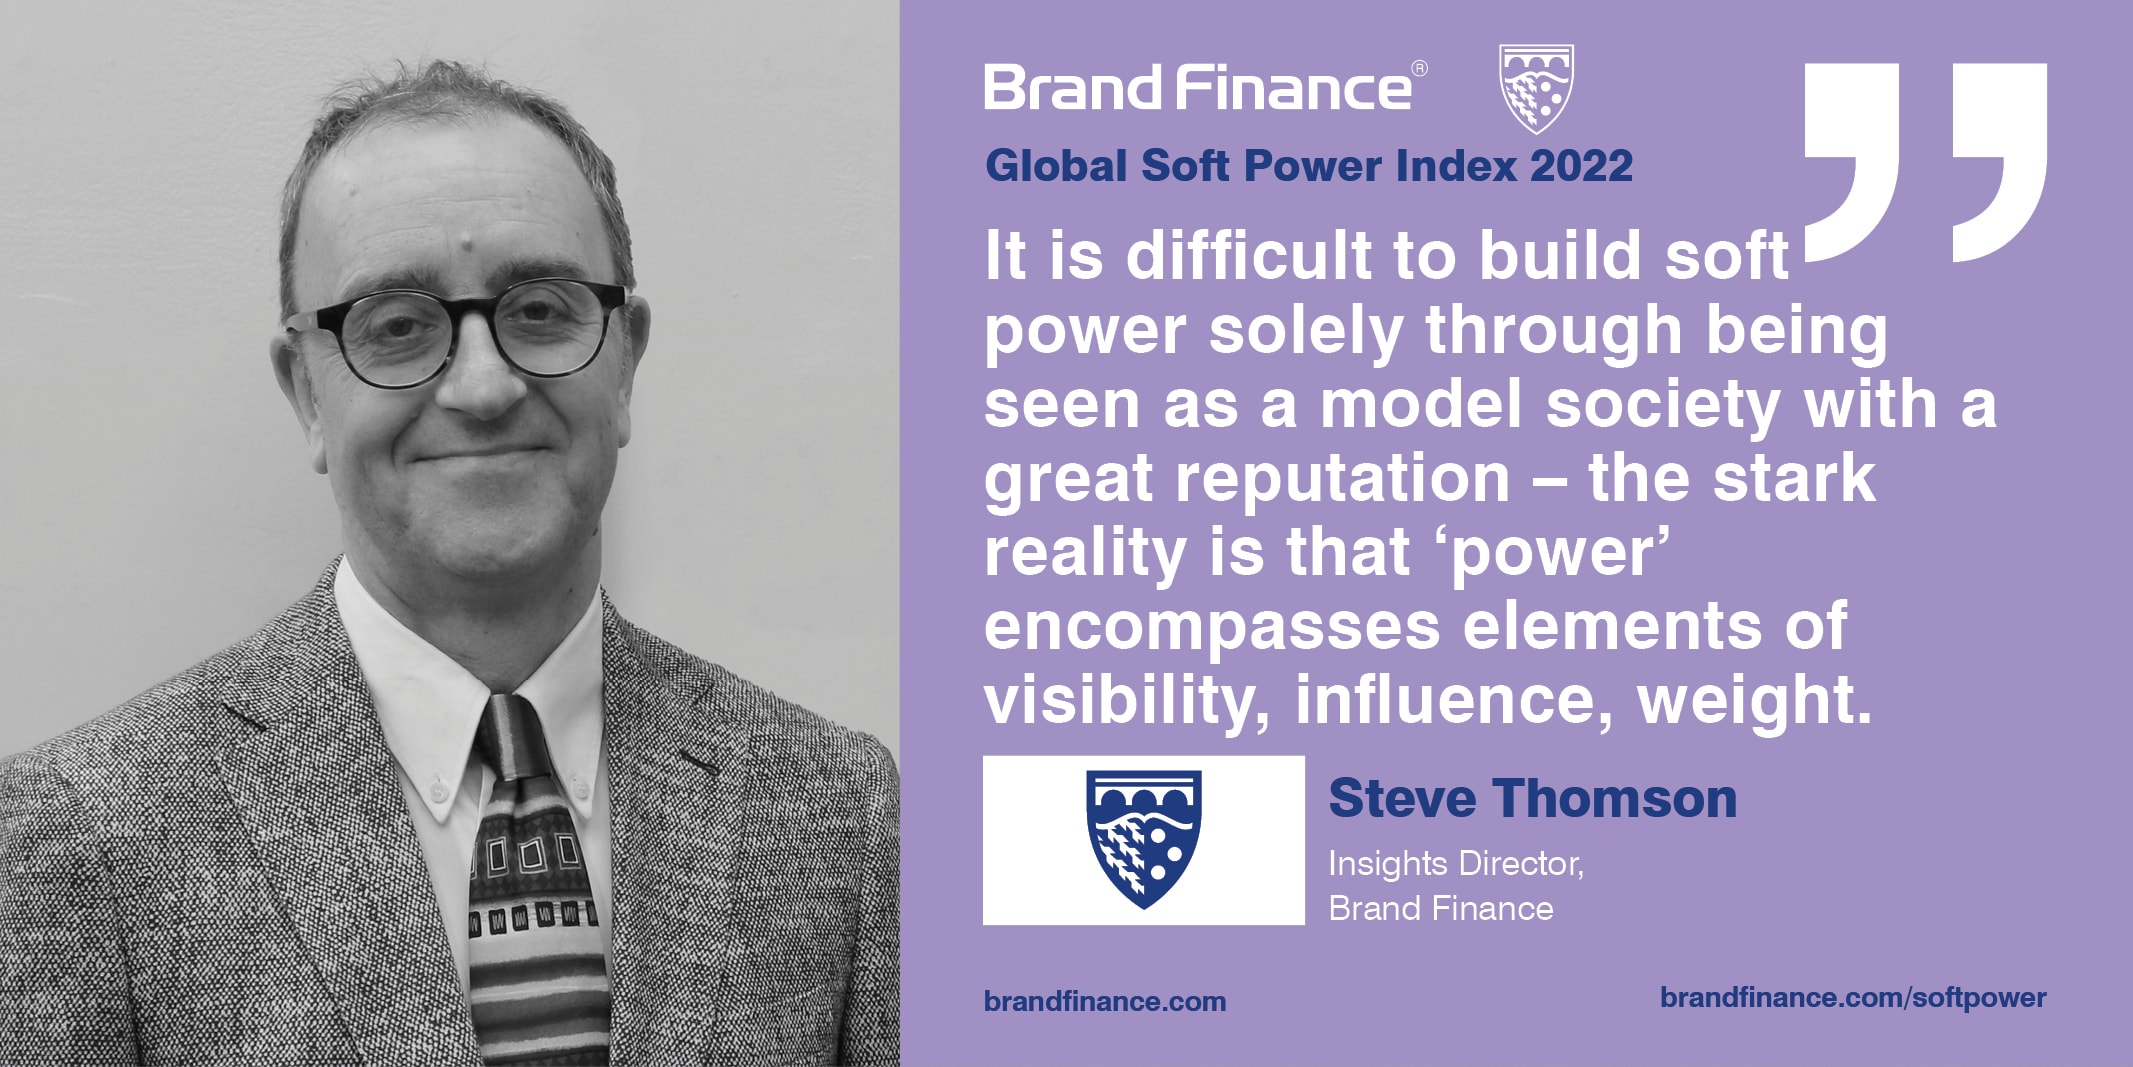 Steve Thomson, Insights Director, Brand Finance